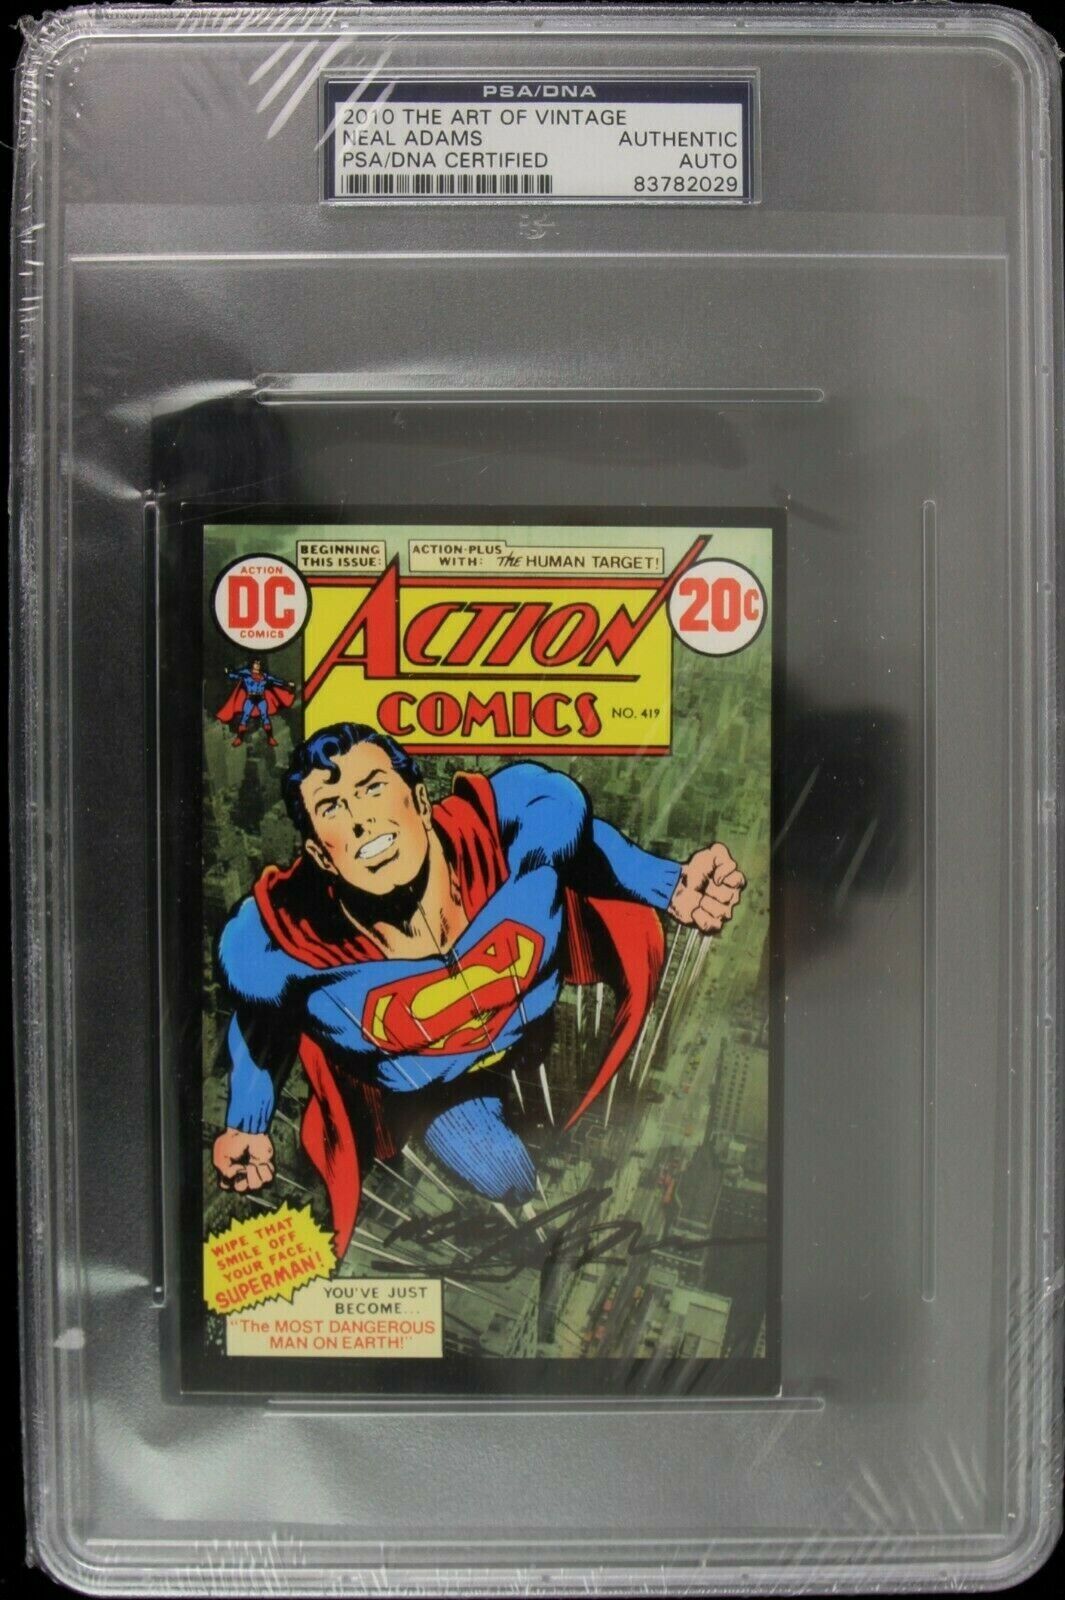 2010 Neal Adams Superman The Art of Vintage Signed Postcard (PSA/DNA)